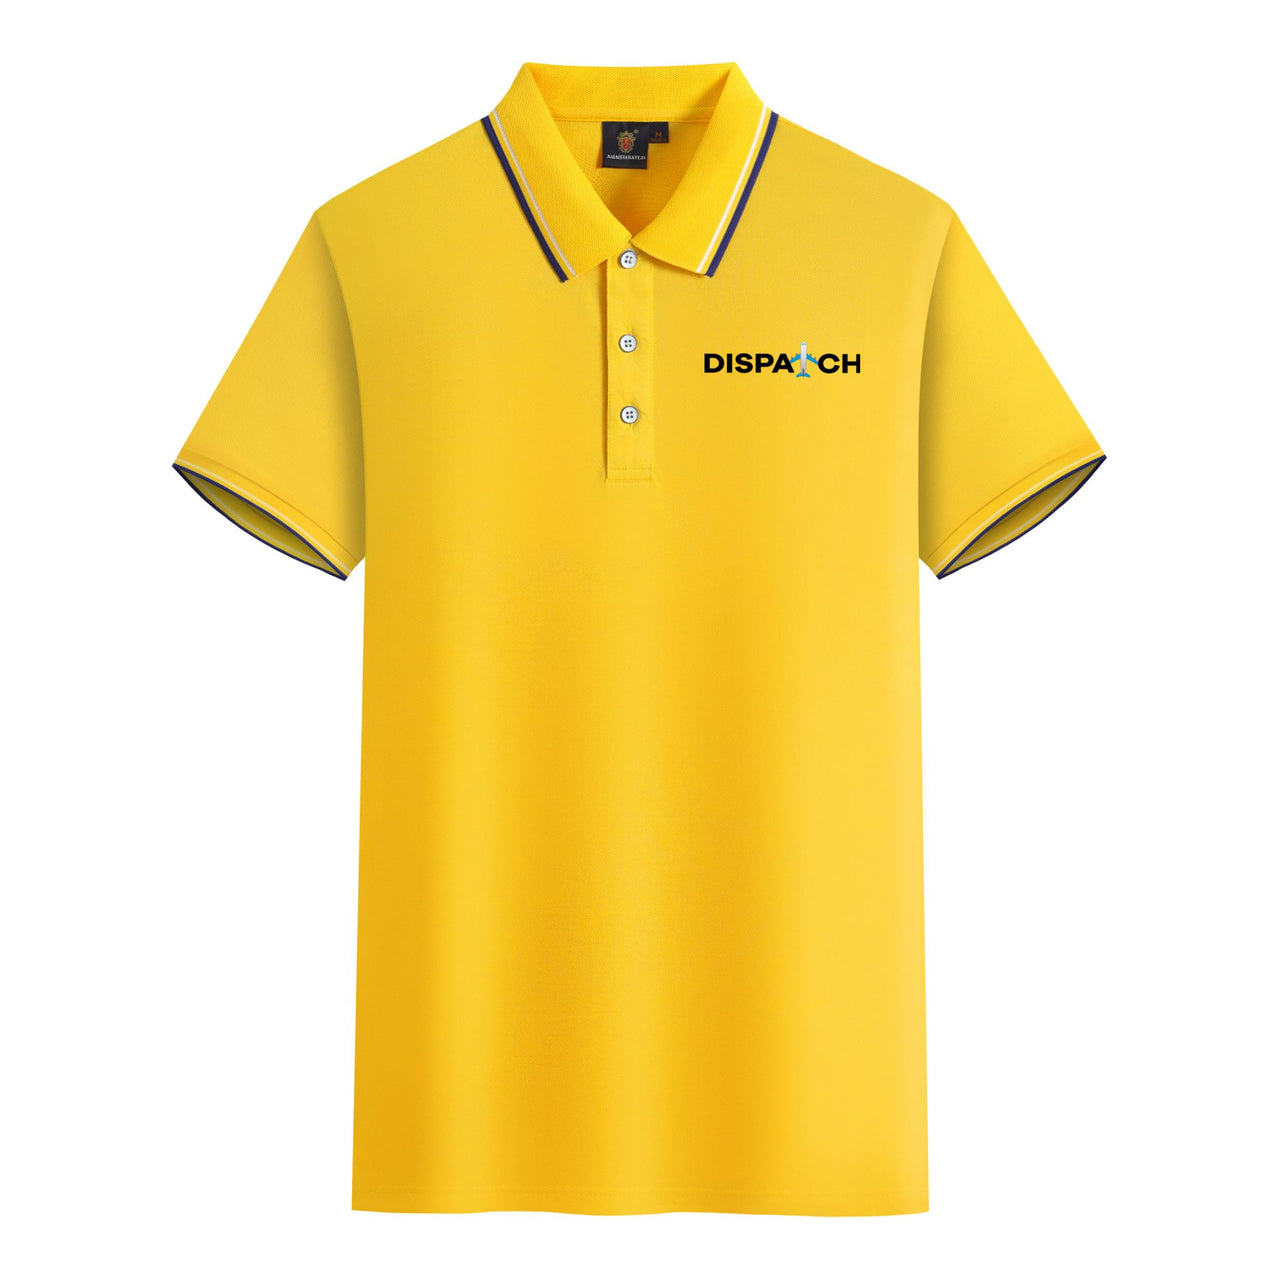 Dispatch Designed Stylish Polo T-Shirts